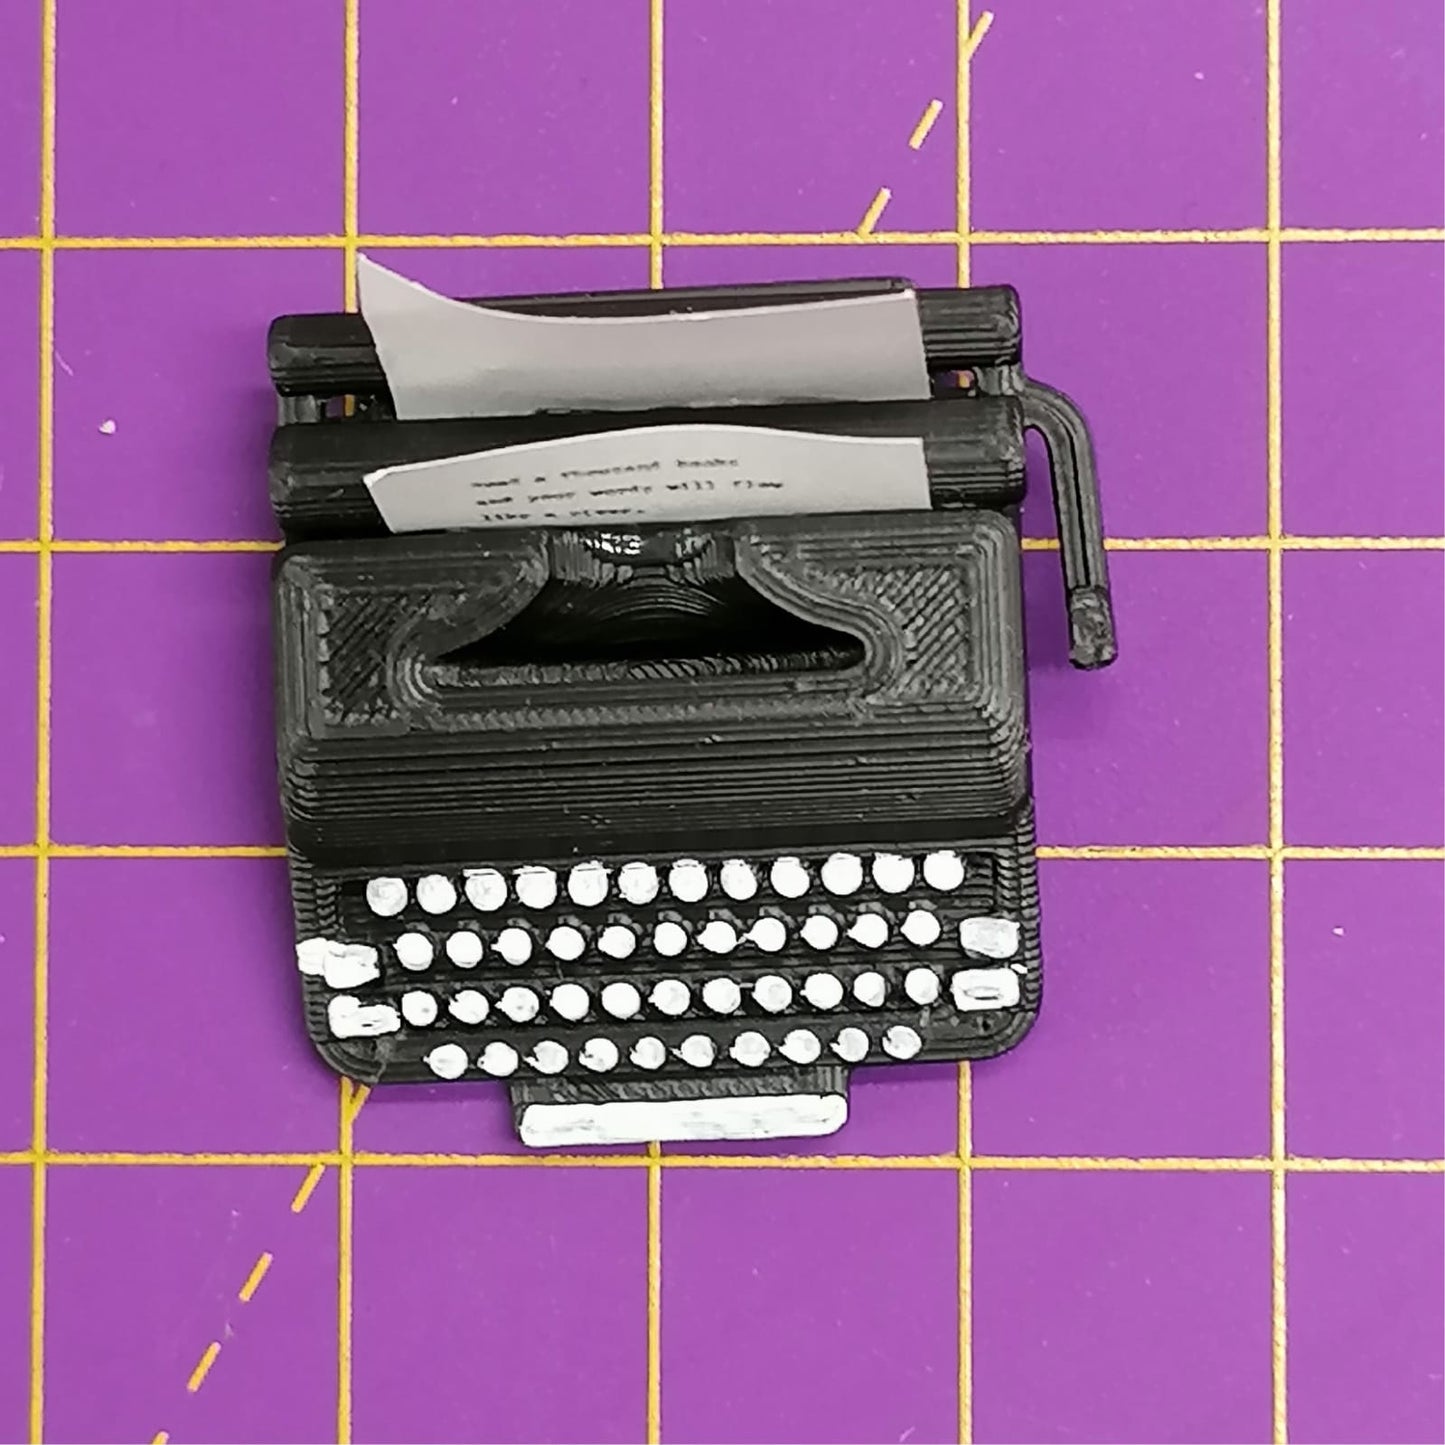 Miniatuur typemachine